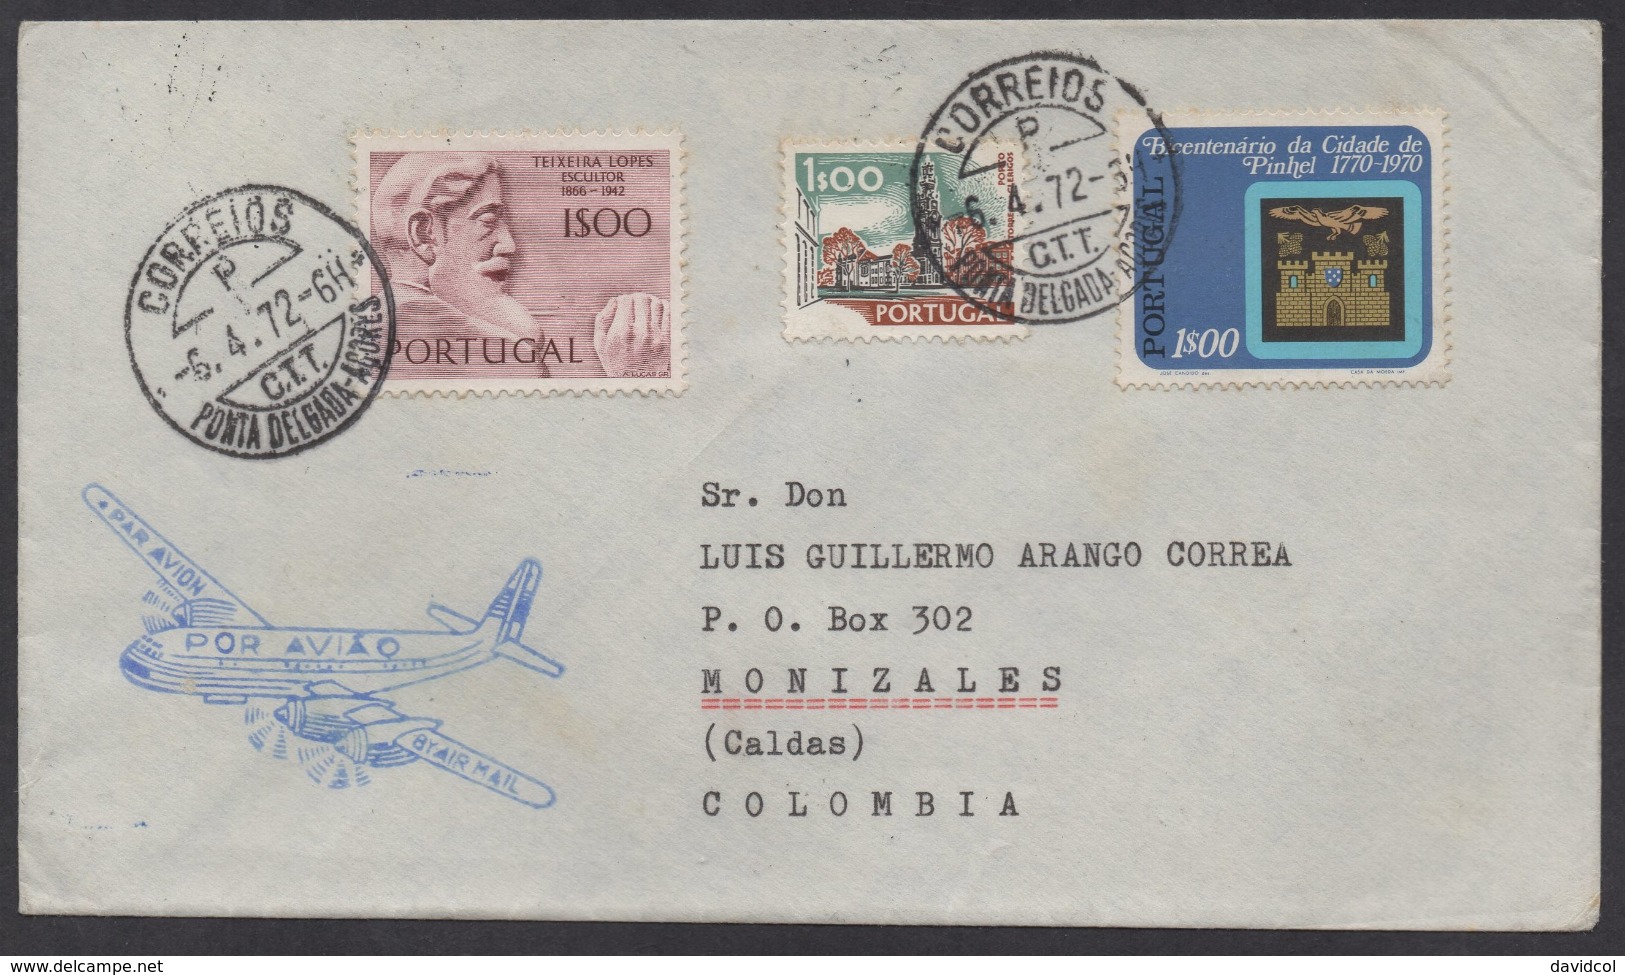 SA184- PORTUGAL-AZORES - 1972 - PONTA DELGADA 6-4-72 TO MANIZALES-CALDAS-COLOMBIA 12-IV-72 - Portugees-Afrika